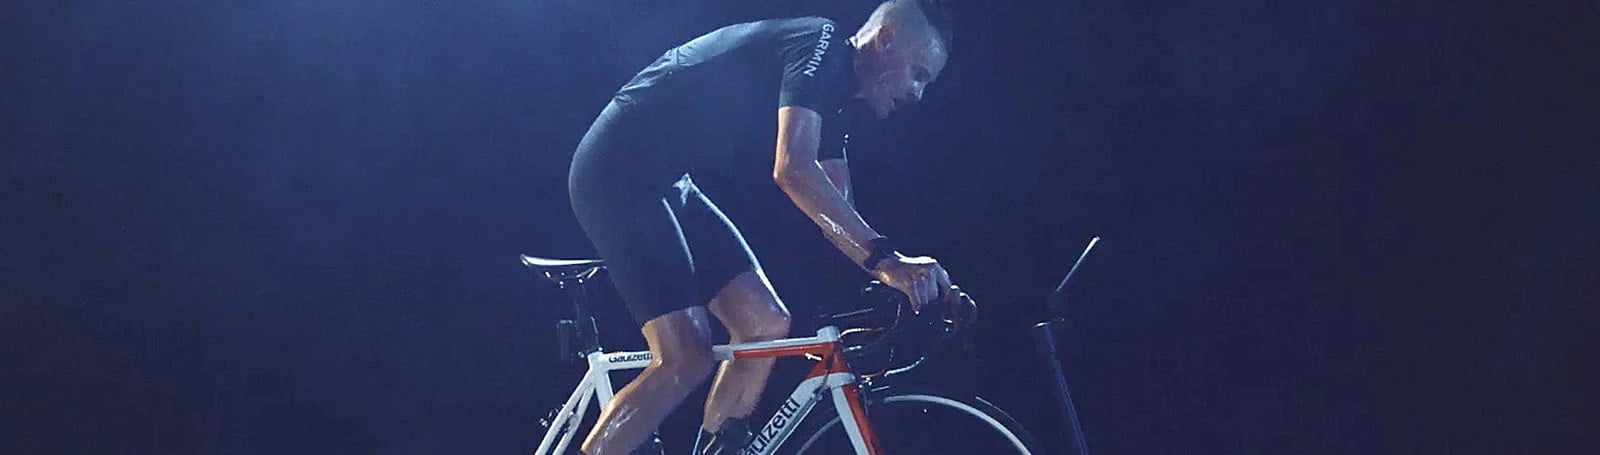 GARMIN grand support frontal pour vélo CYCLES ET SPORTS